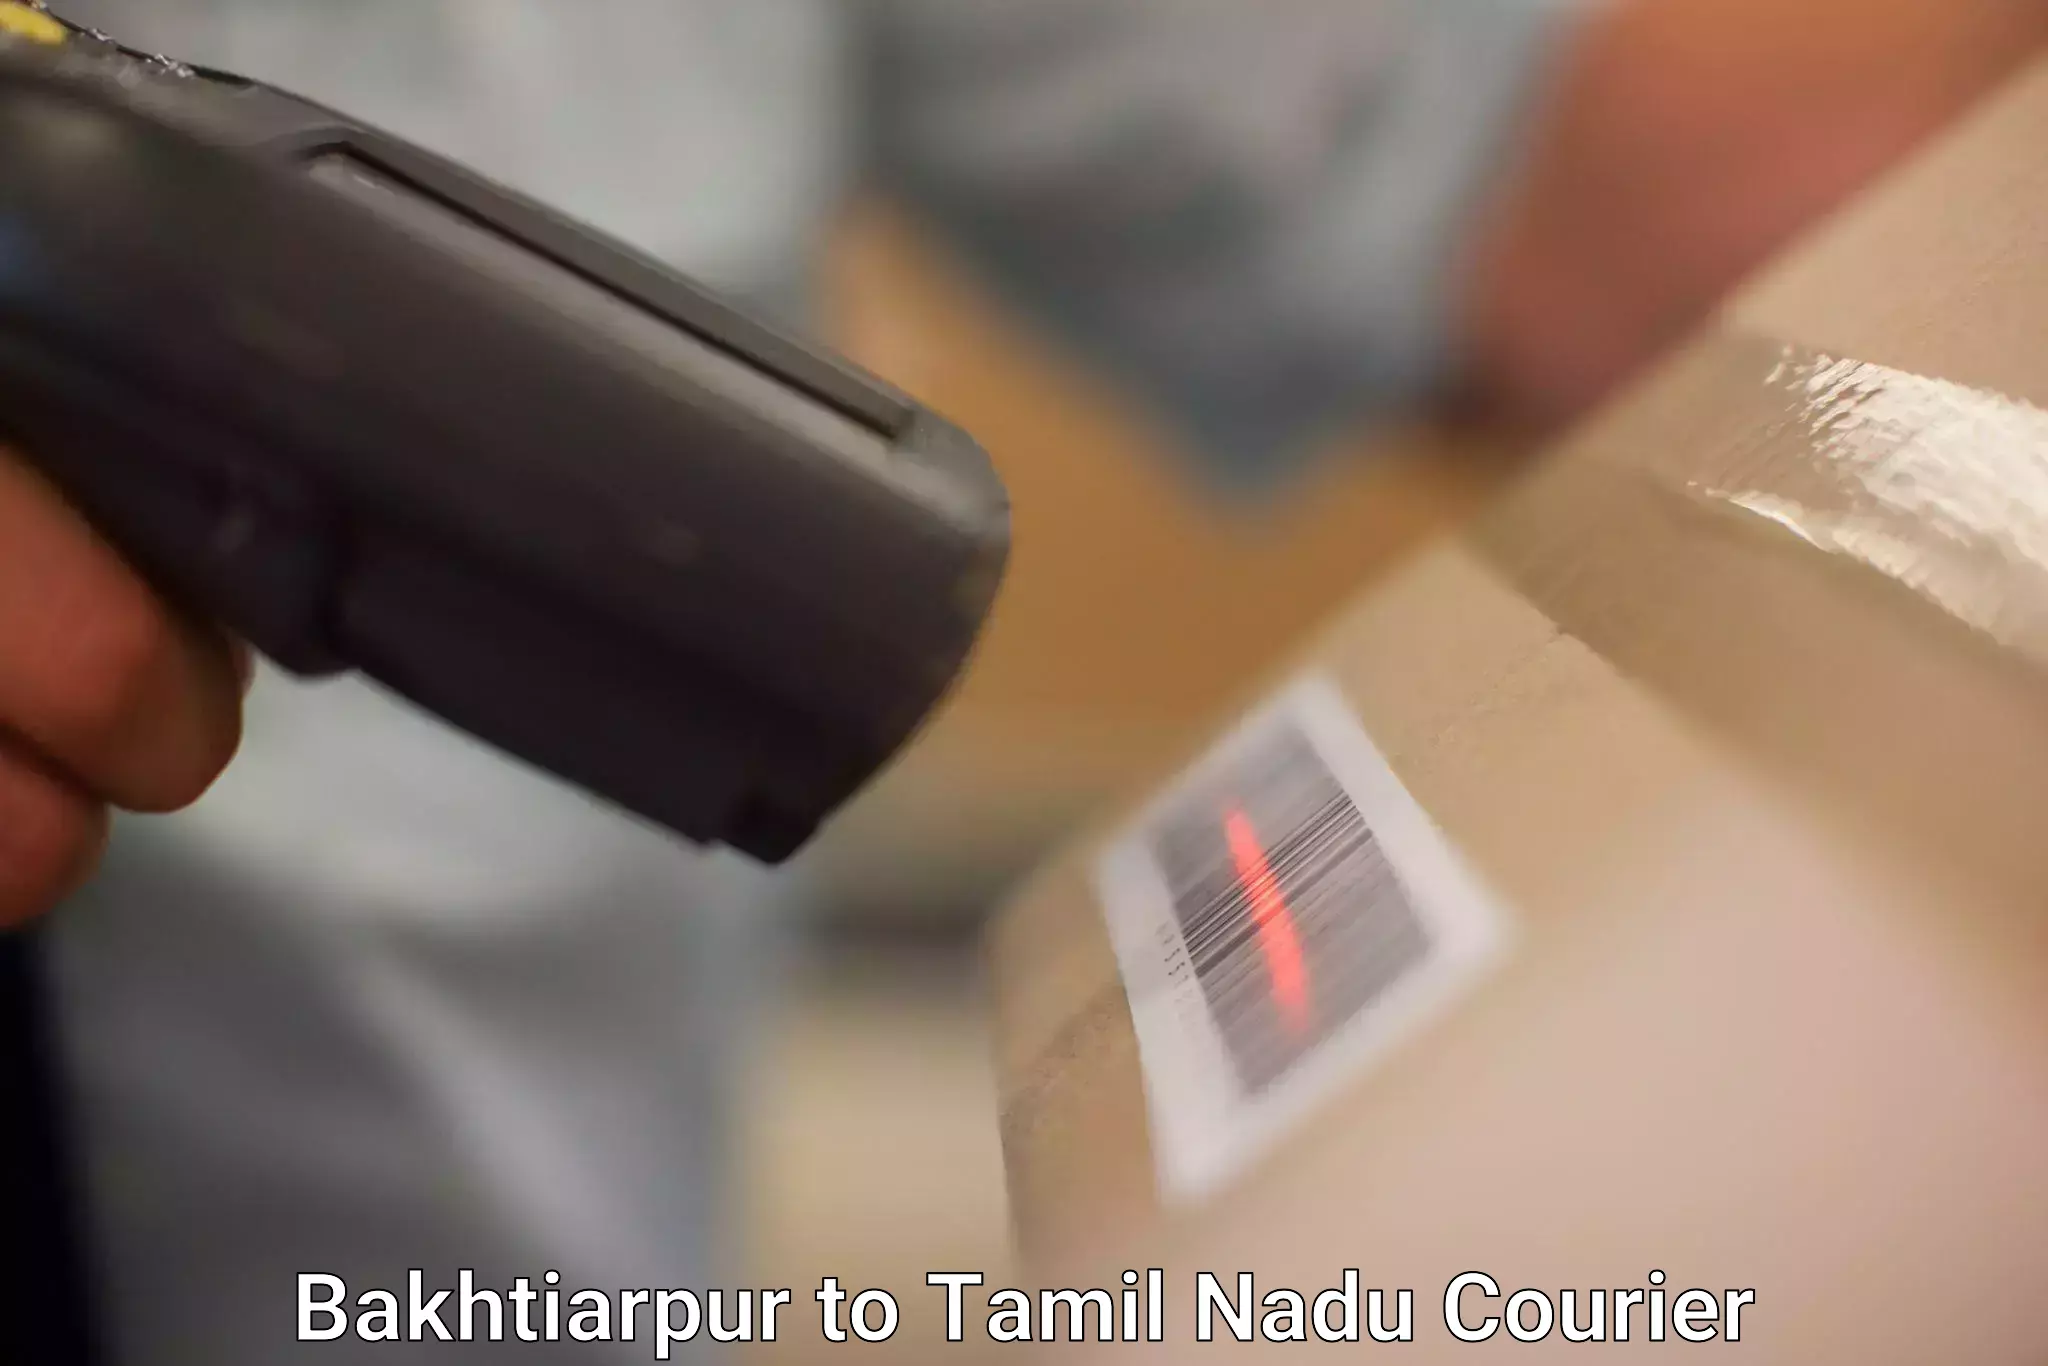 Sustainable delivery practices Bakhtiarpur to Thiruthuraipoondi